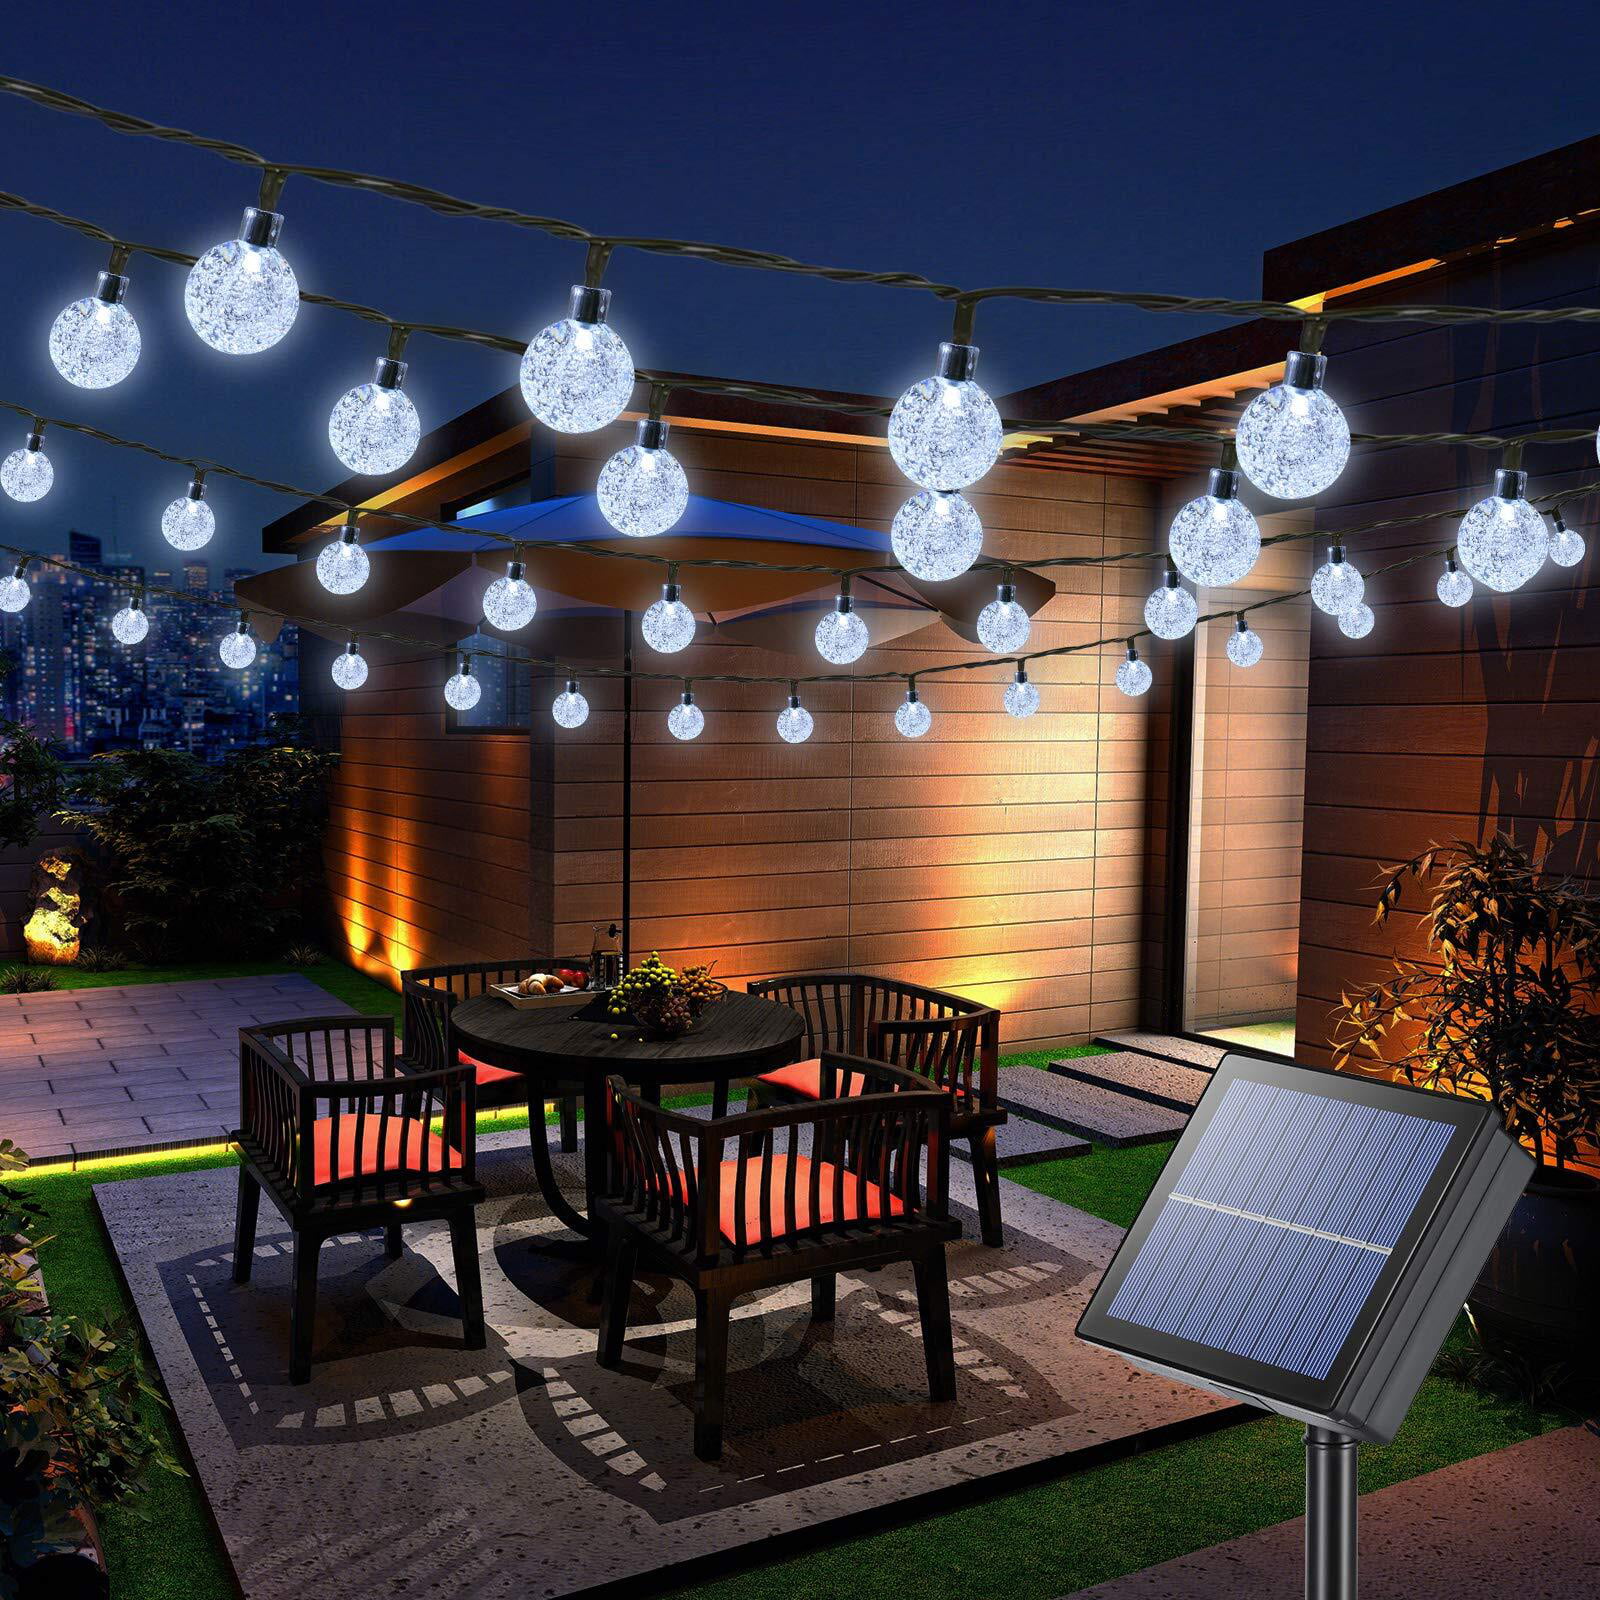 21ft 30 LED Solar String Ball Lights Outdoor Waterproof Warm White Garden Decor 